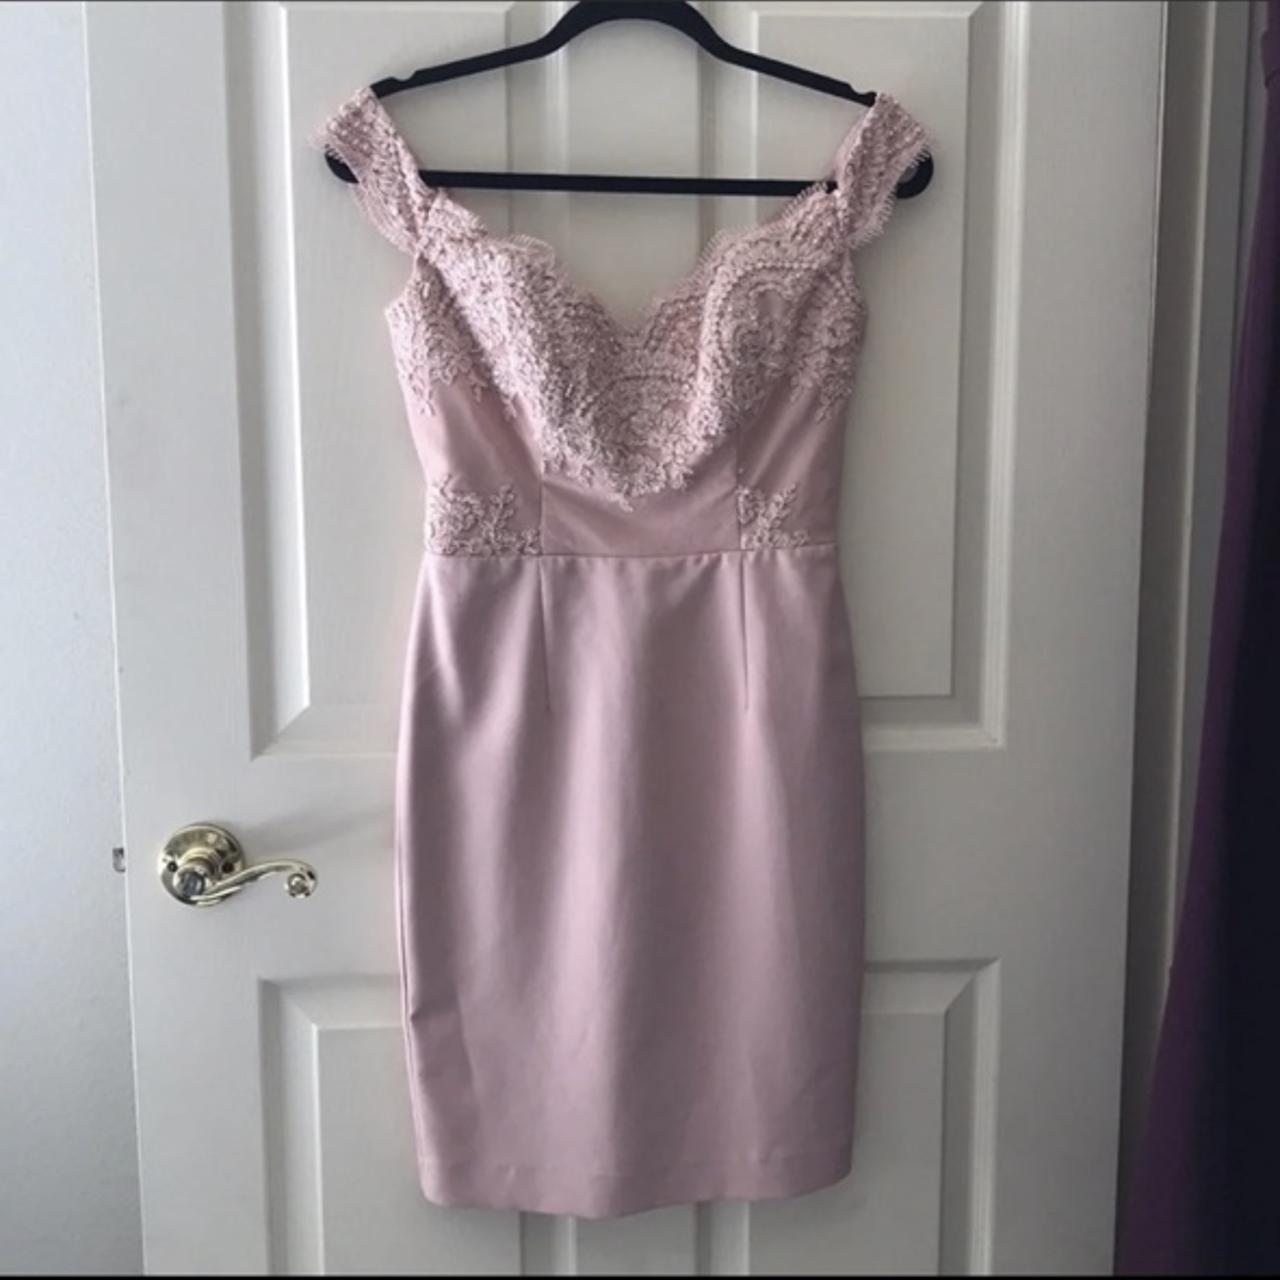 Product Image 1 - Dollhouse XOXO Cocktail Dress

Mauve/light pink